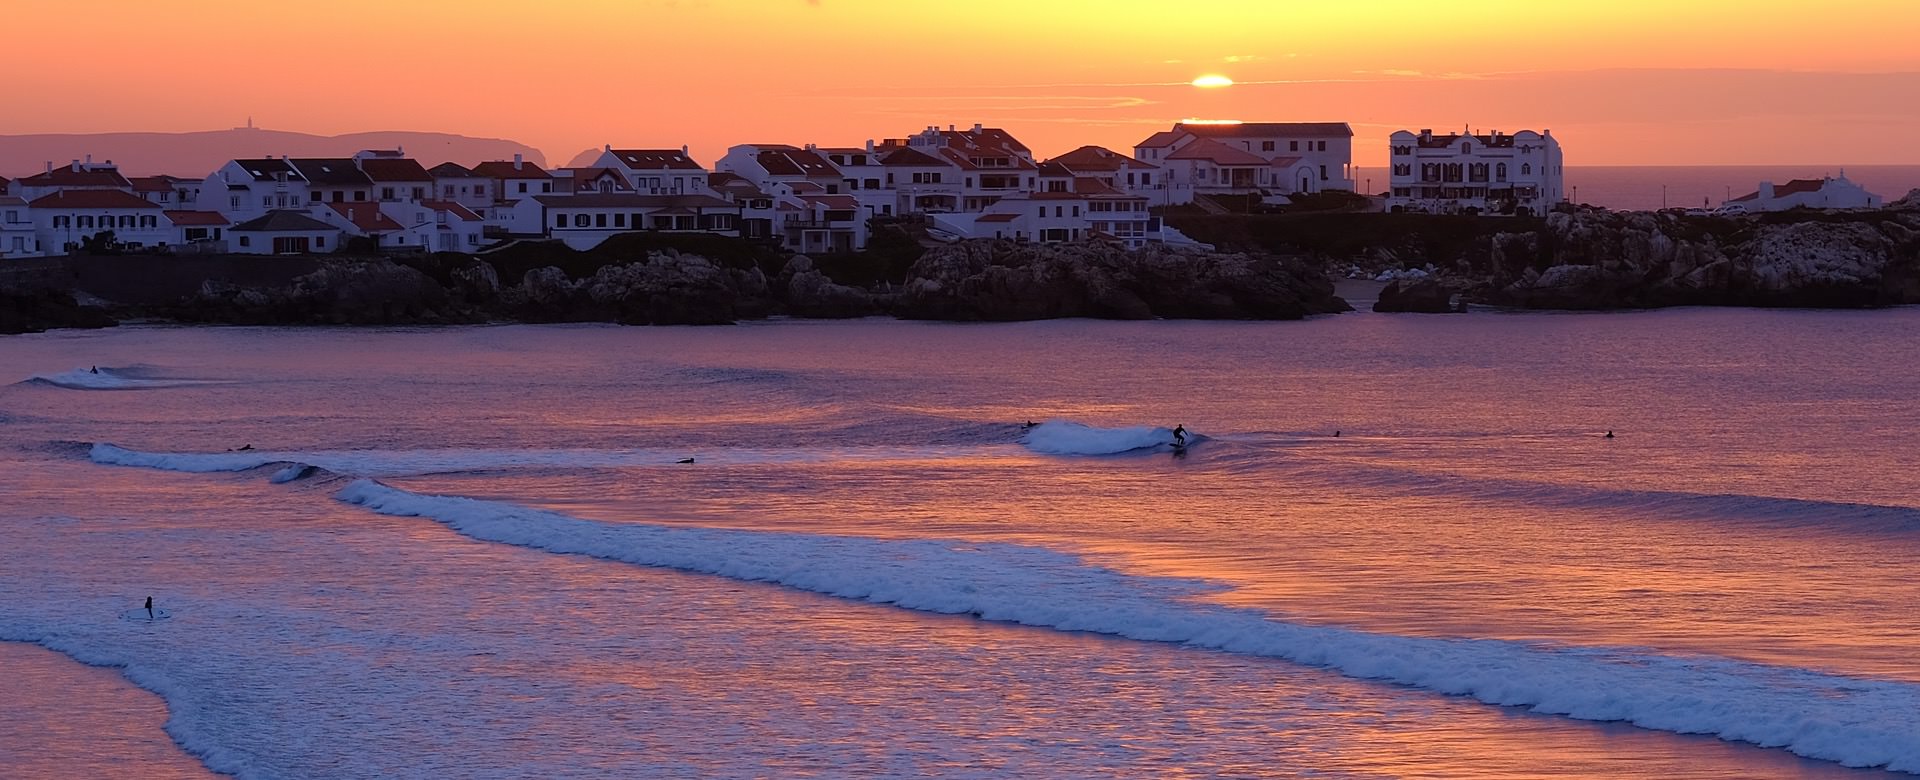 Sunset surf em Baleal, Peniche